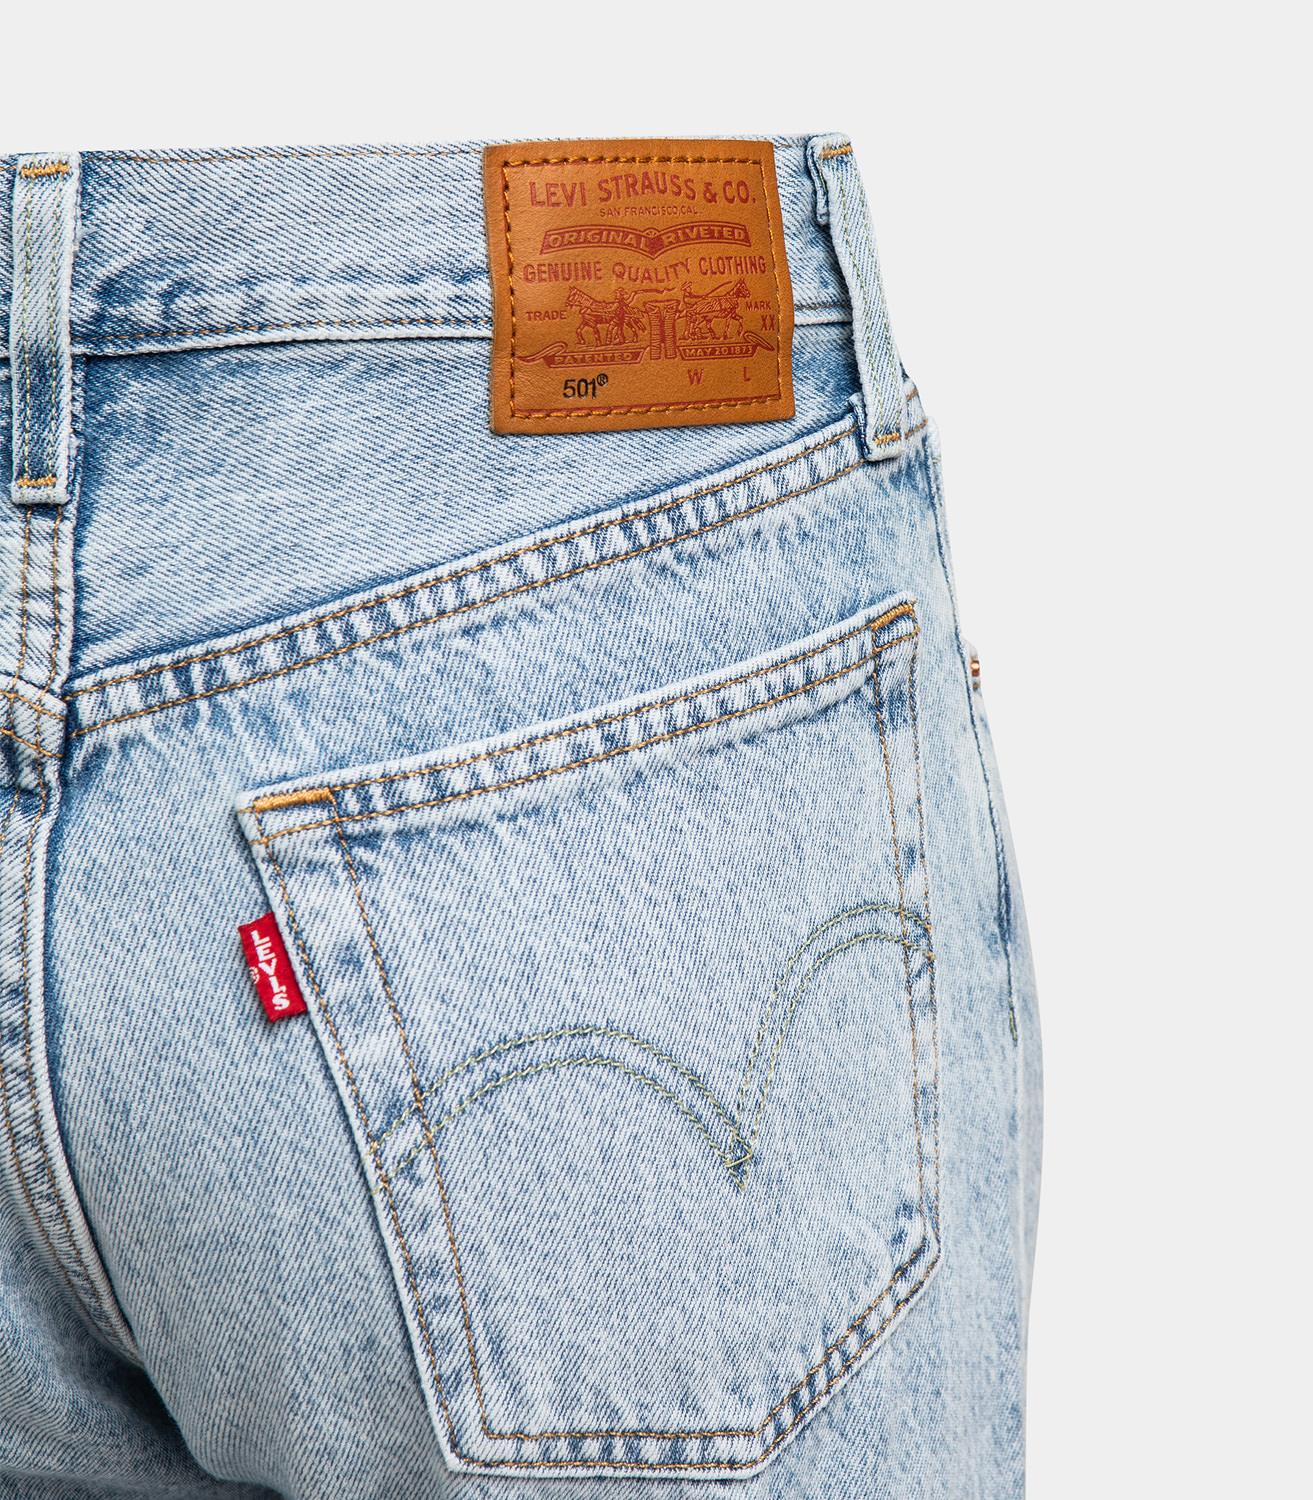 h&m vintage fit high waist jeans